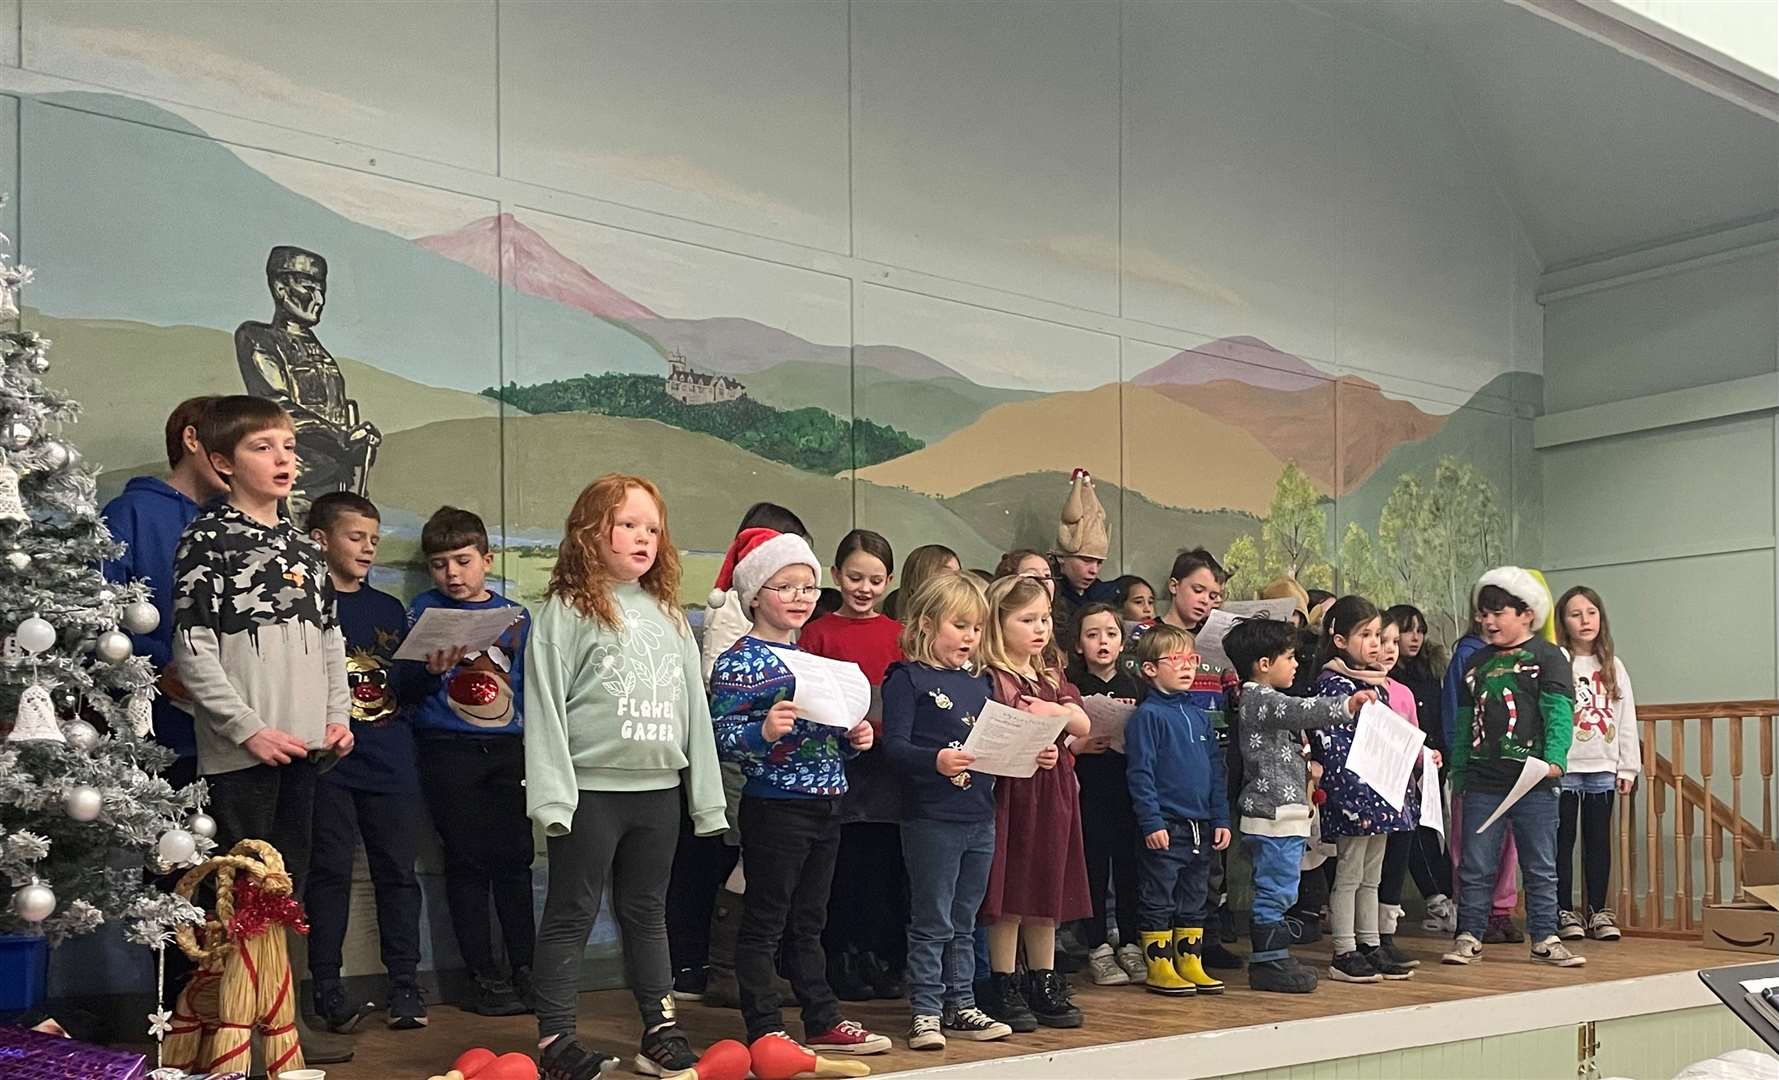 Pupils from Gledfield and Bonar Bridge primary schools sang carols led by singing coach Simone Laraway.